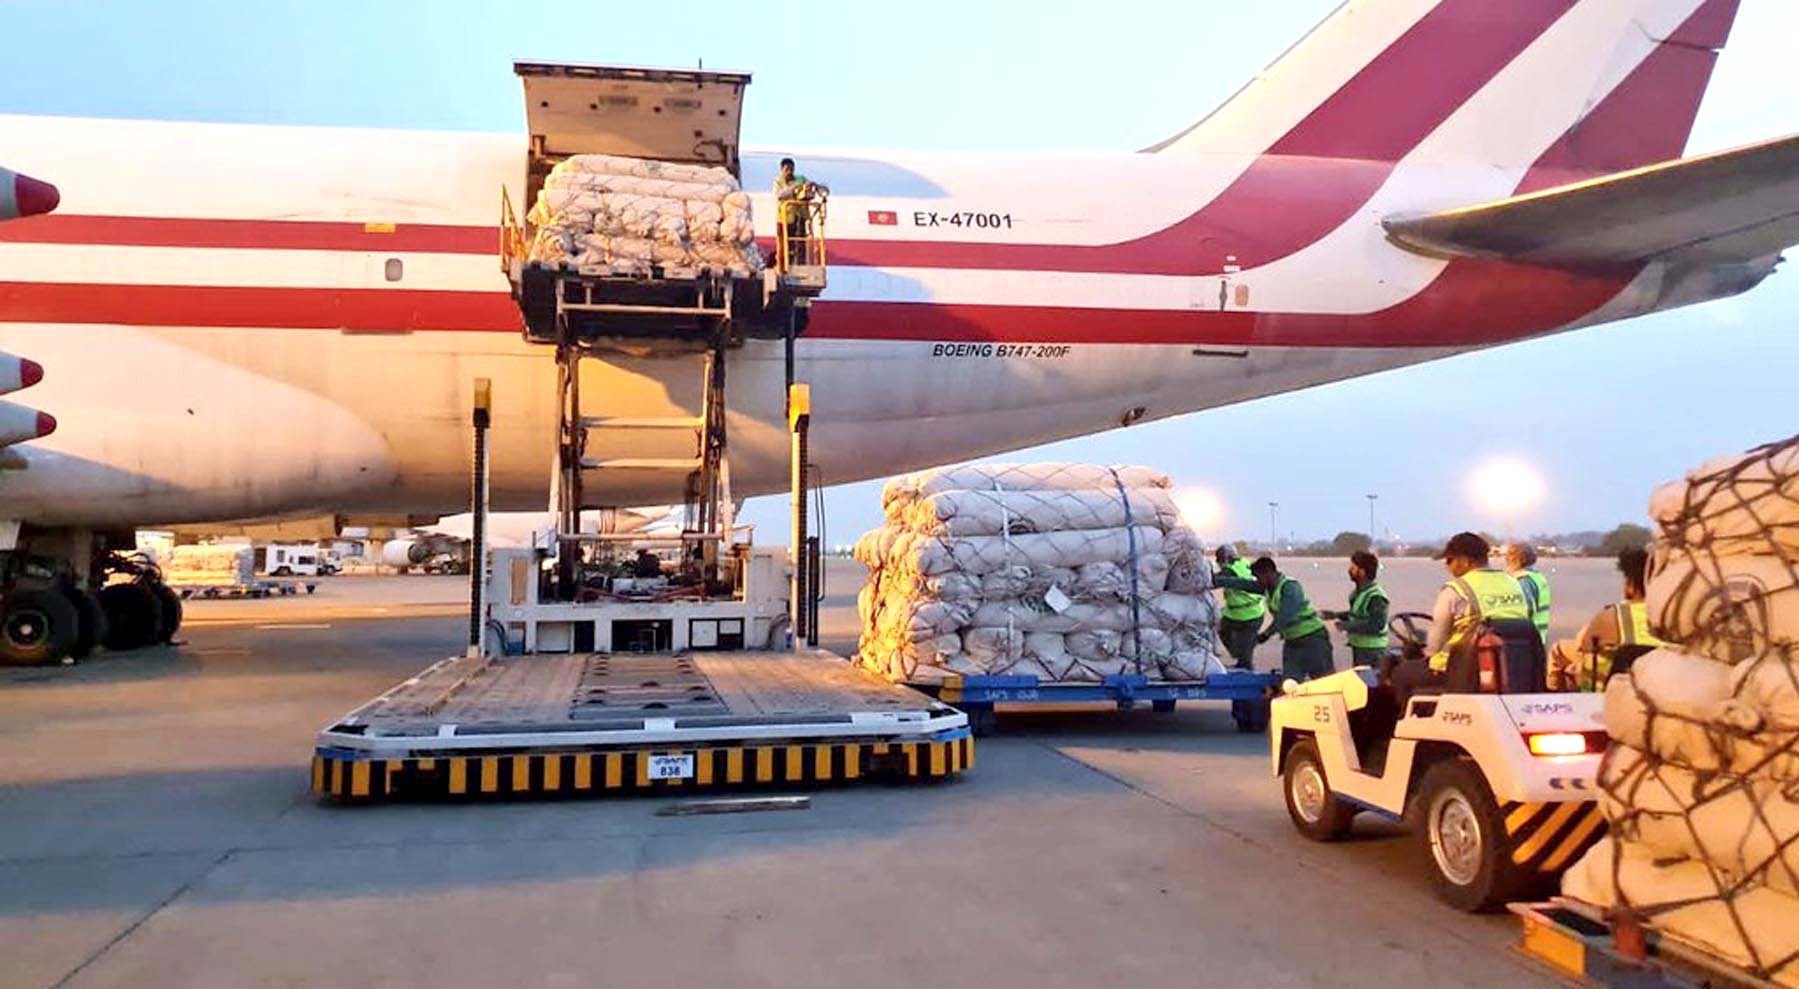 NDMA dispatches 11th cargo plane carrying 1,200 winterized tents to Turkiye